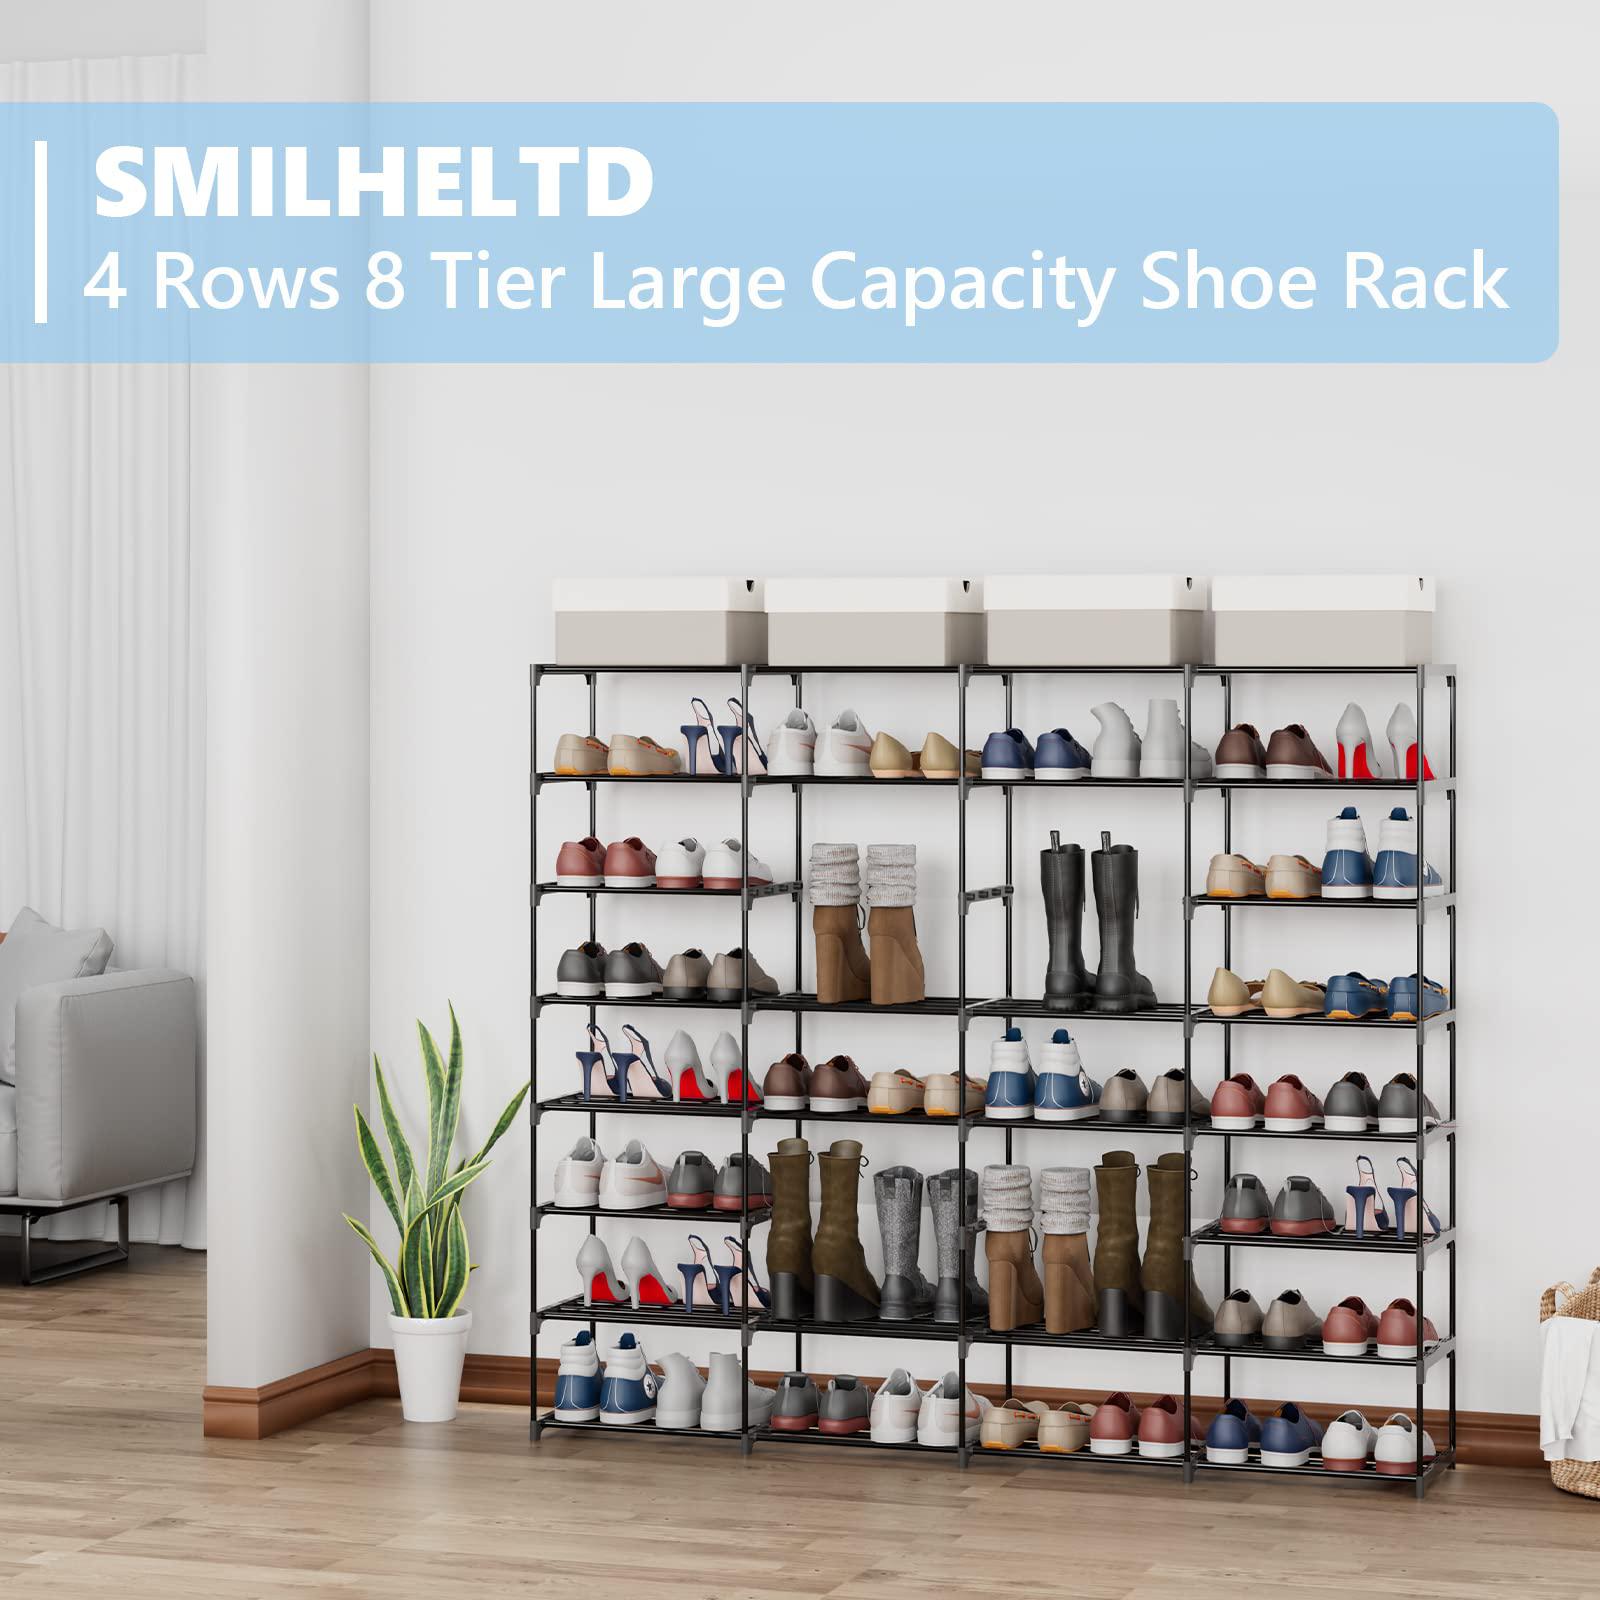 smilheltd shoe rack large capacity 4 rows 8 tier 56-64 pairs shoes boots storage metal shoe organizer household family use en